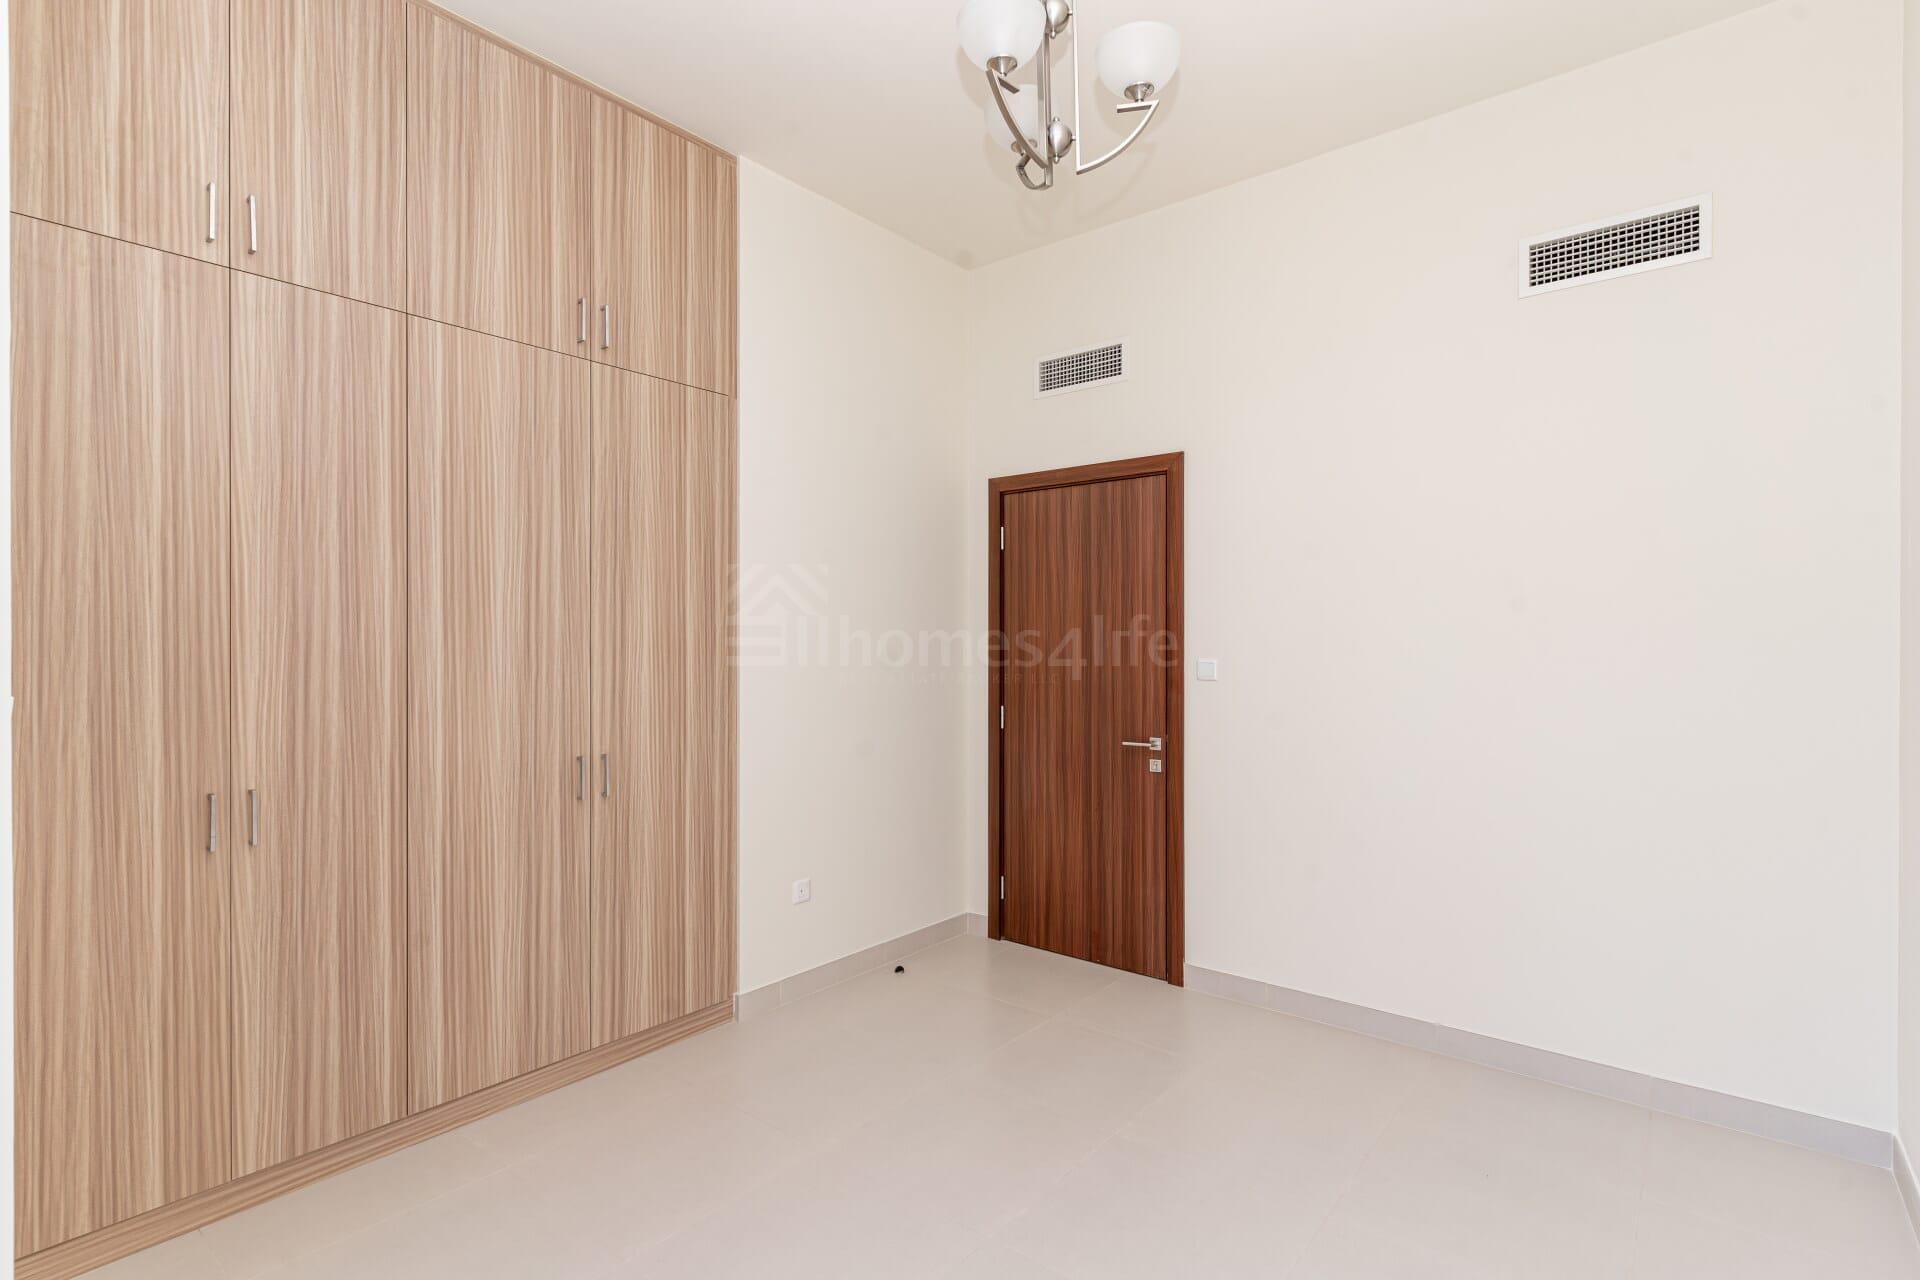 Real Estate_Townhouses for Rent_Mohammad Bin Rashid City